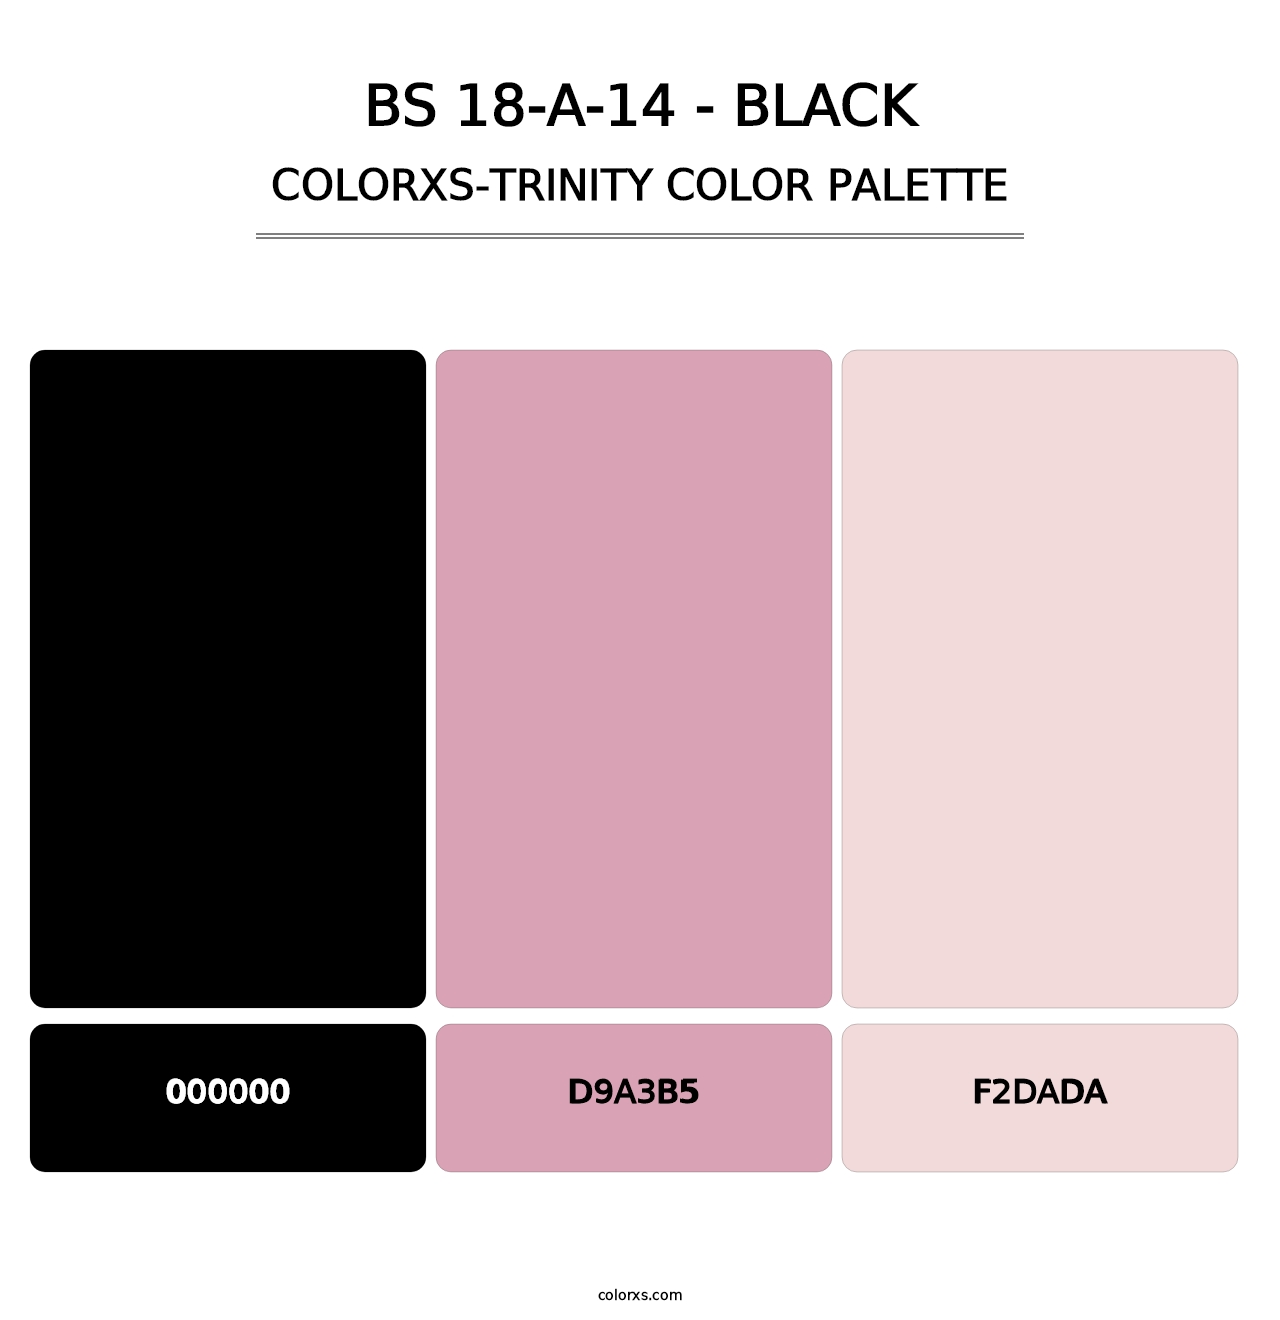 BS 18-A-14 - Black - Colorxs Trinity Palette